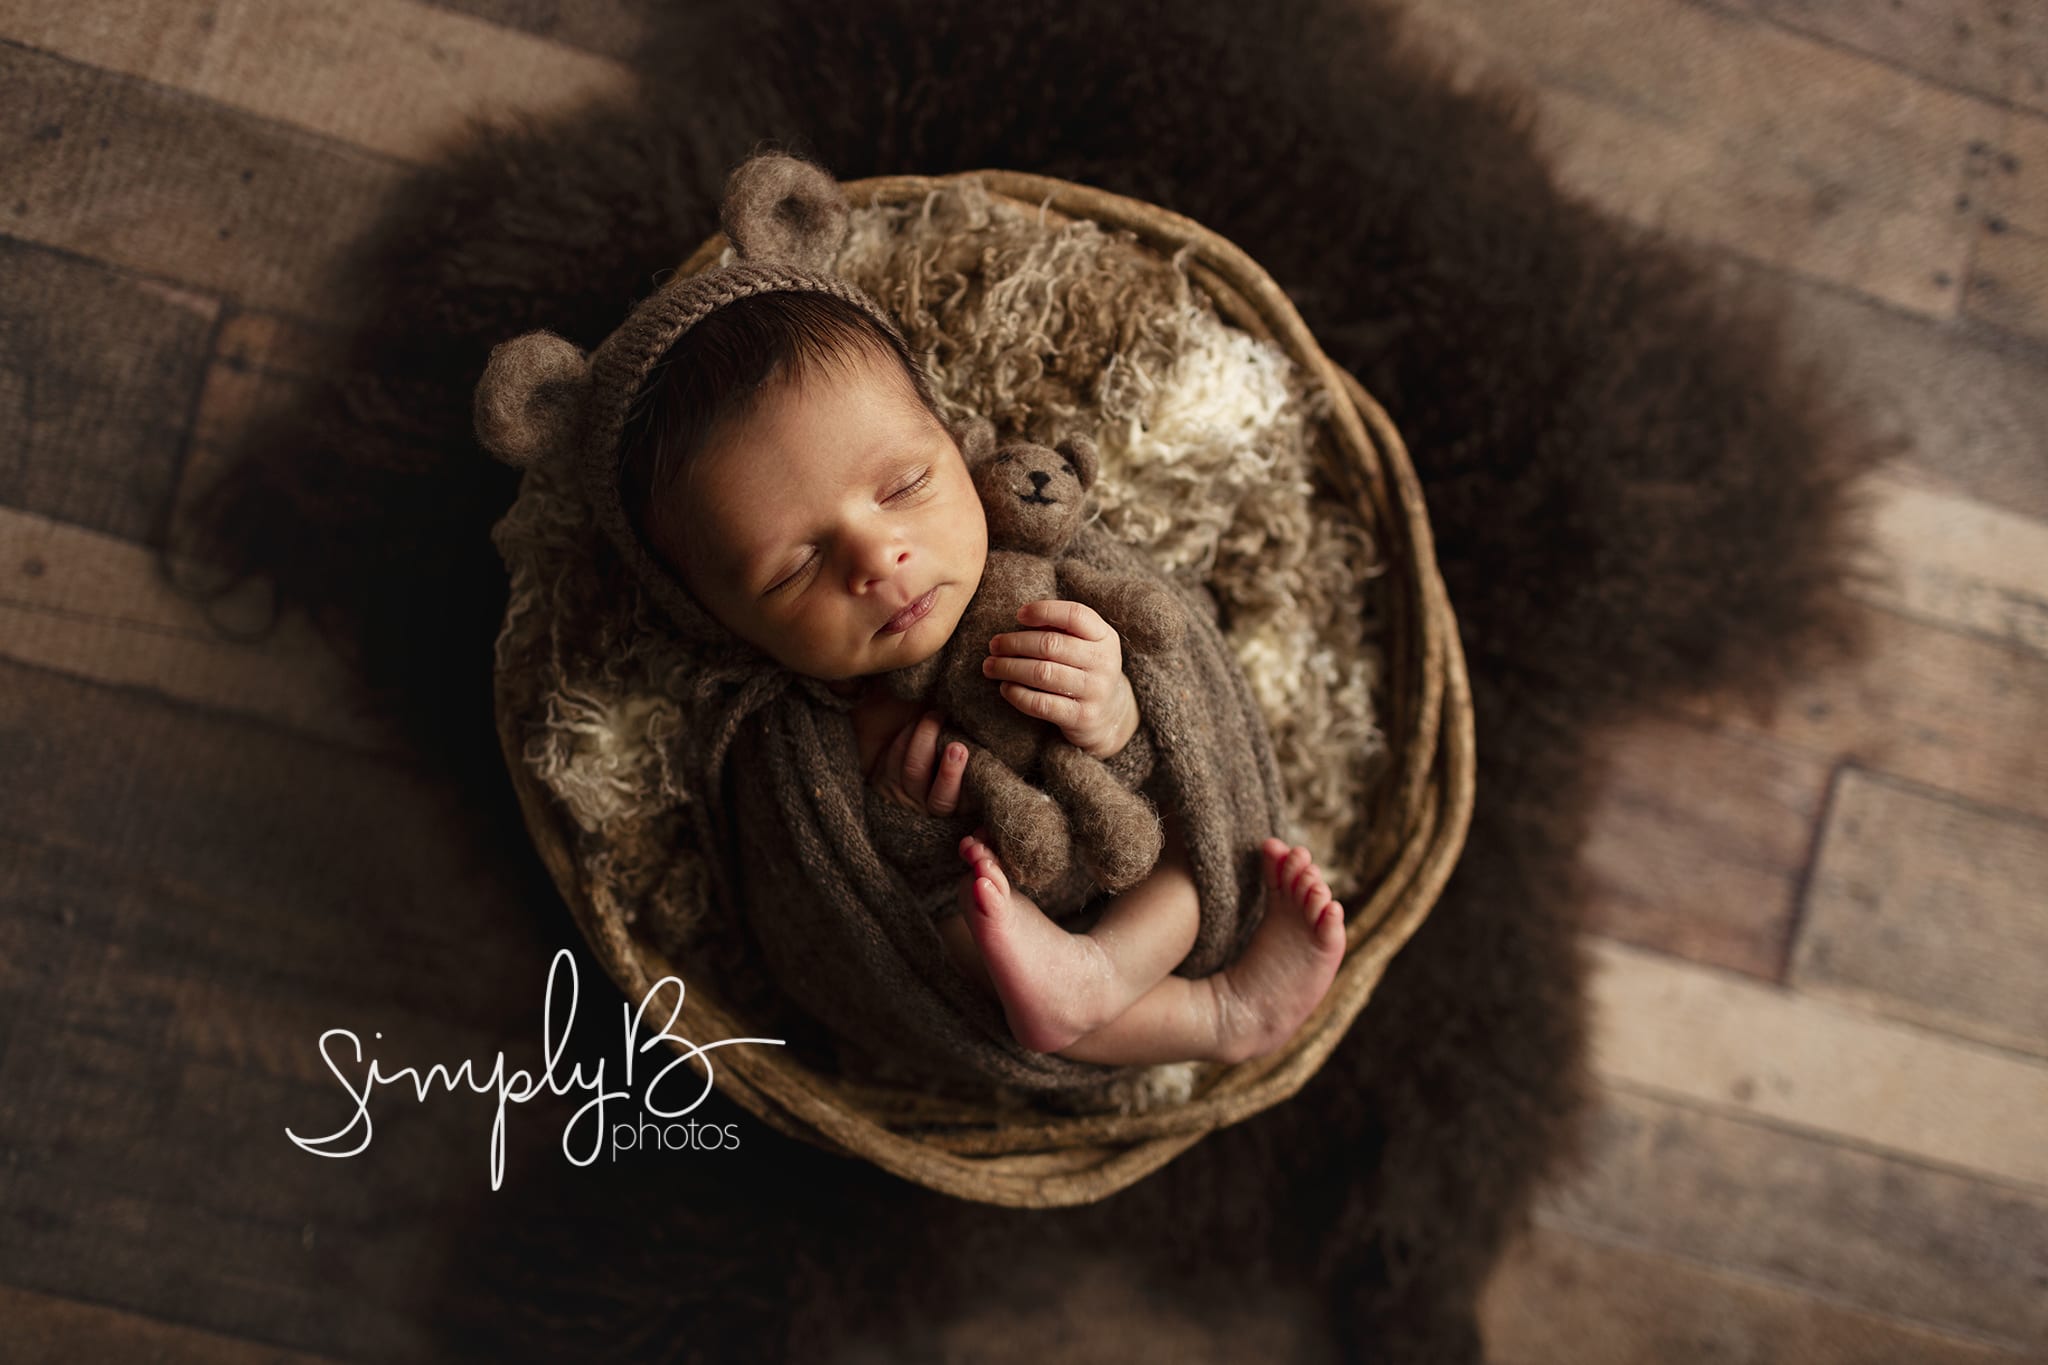 Edmonton newborn photography studio baby boy photos